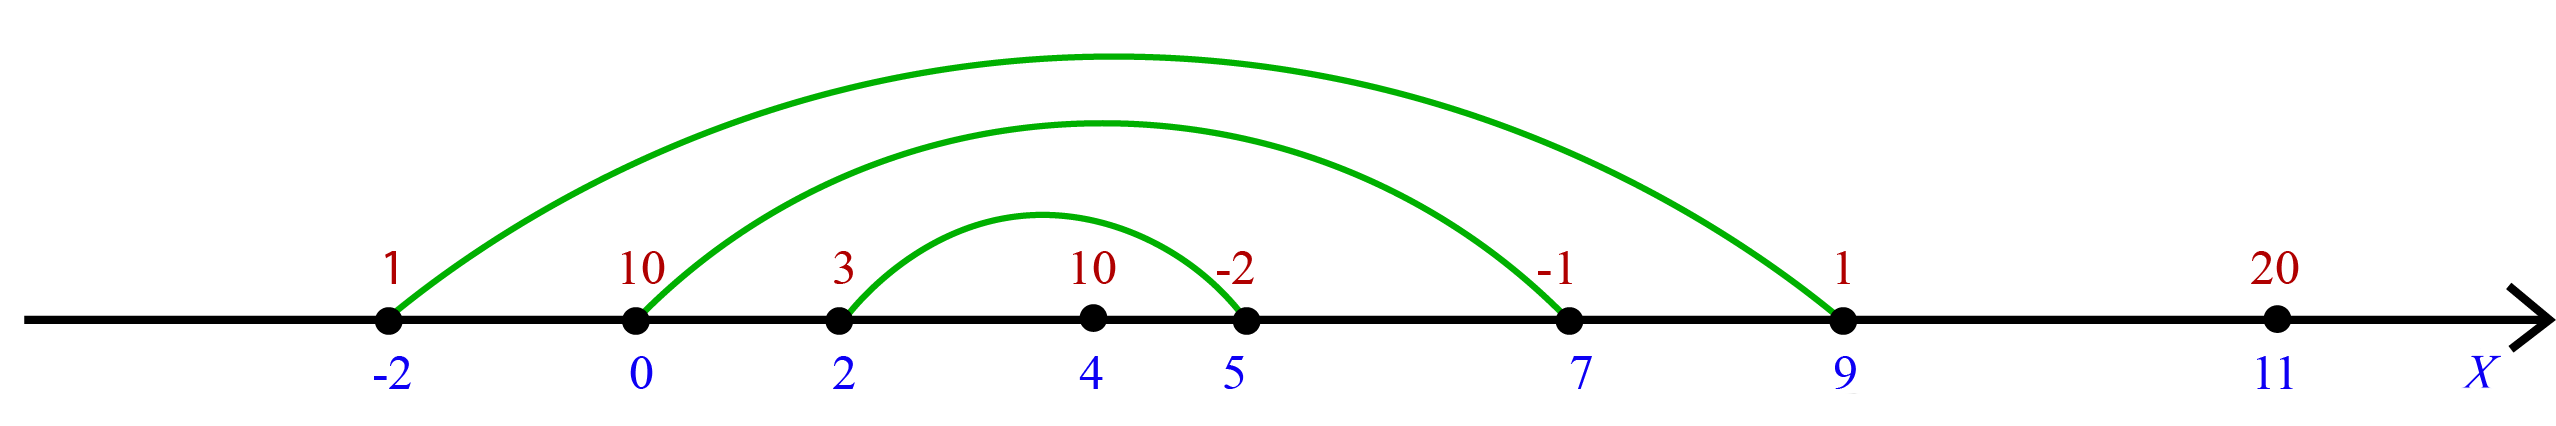 System of three nested segments